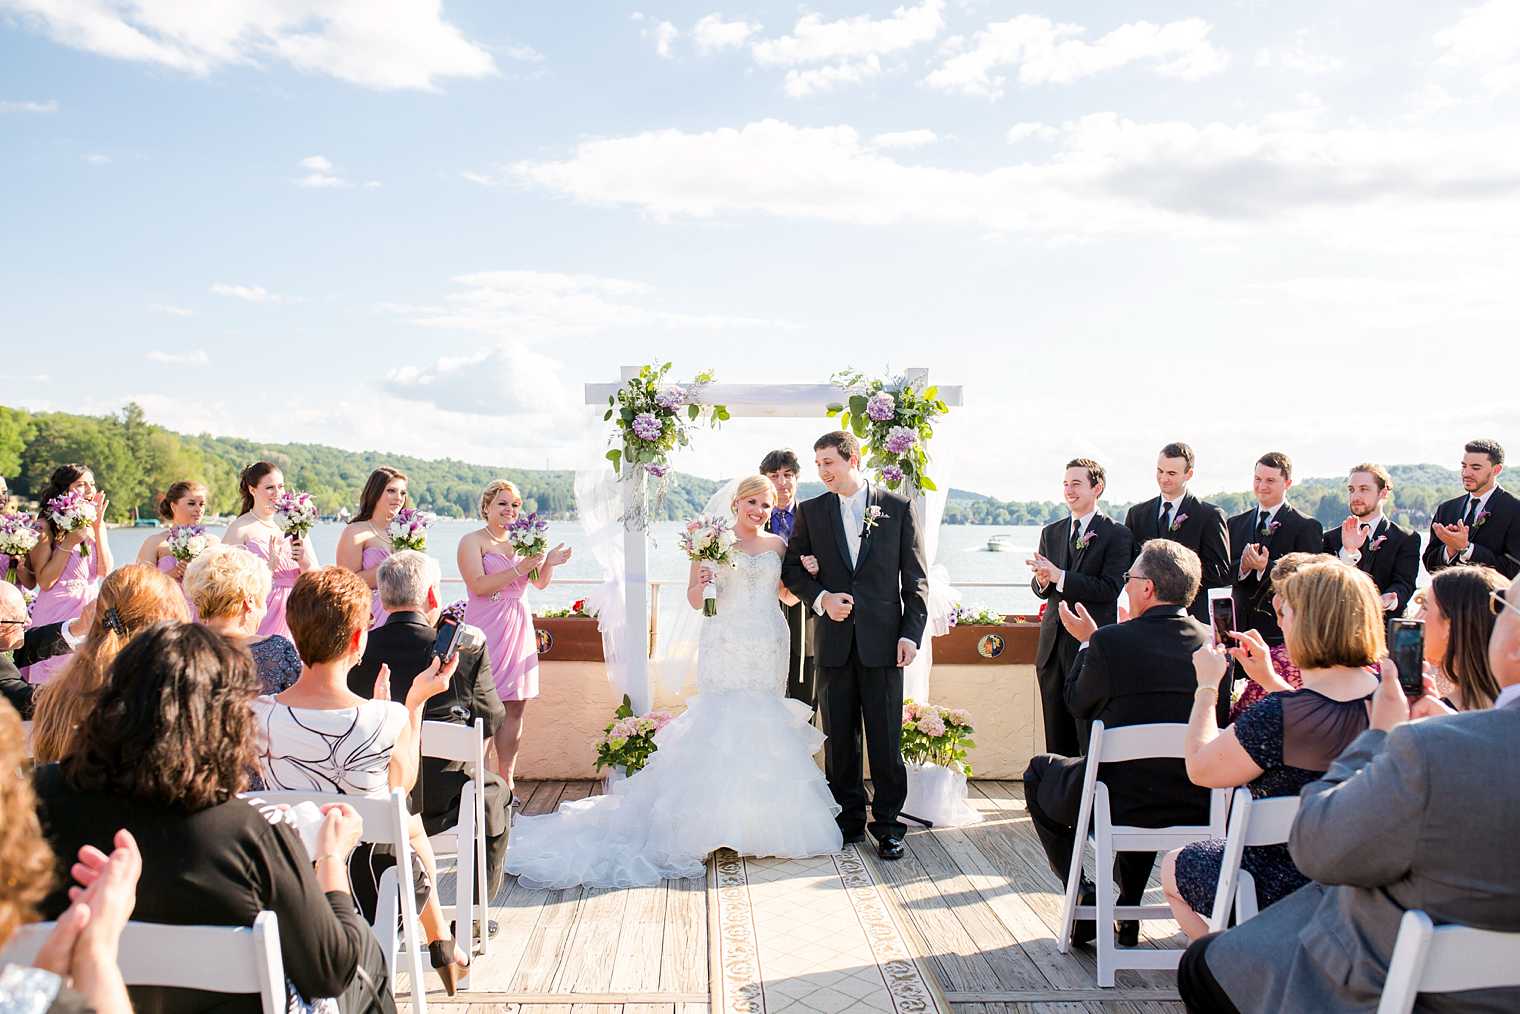 Lake Mohawk Country Club boardwalk wedding photo